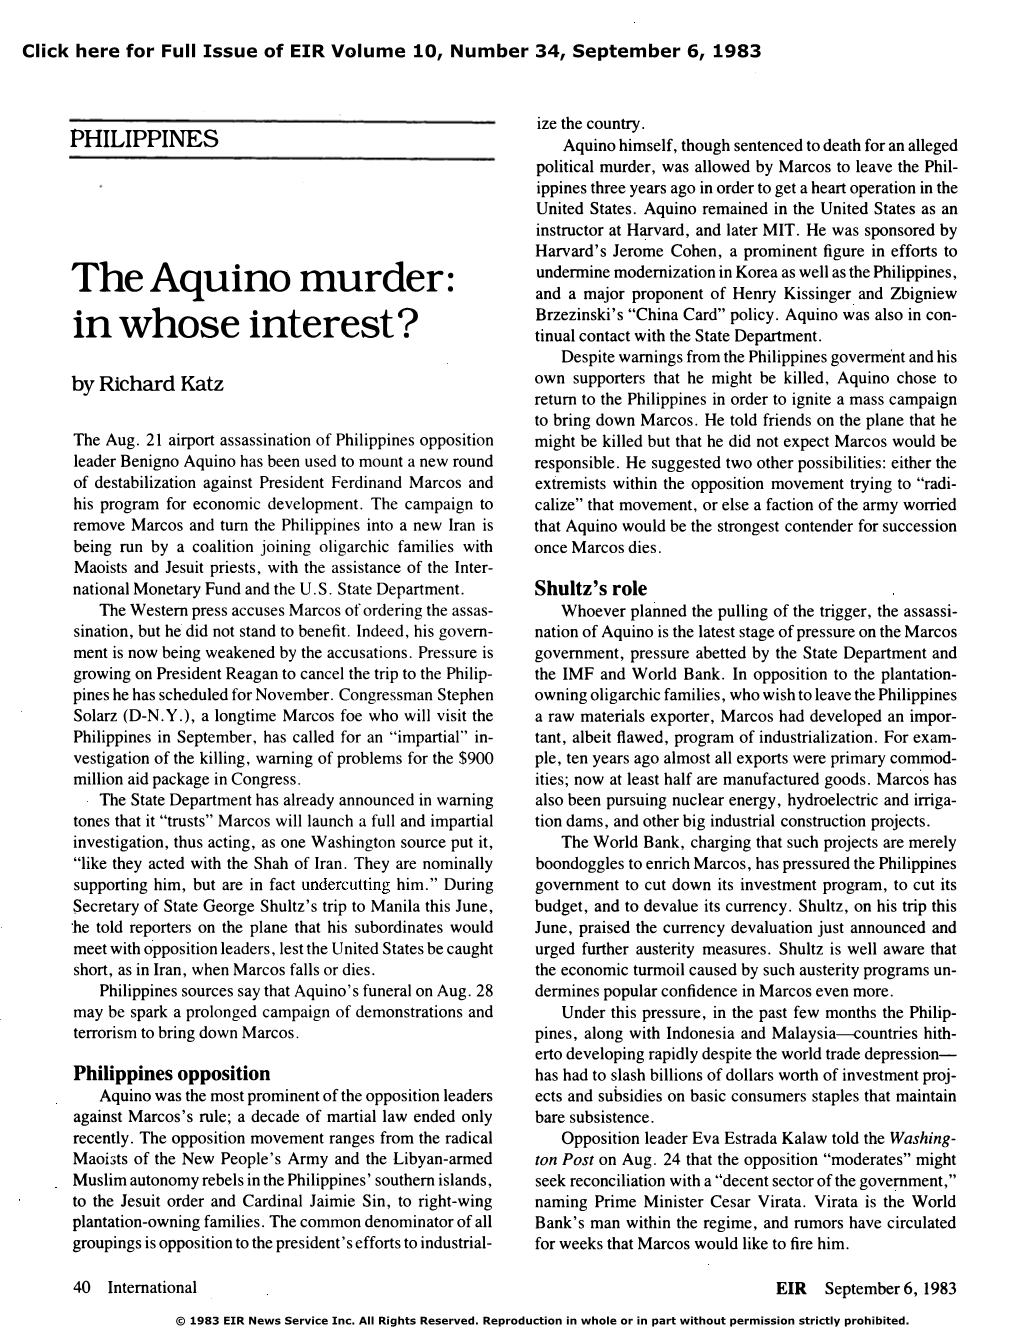 Philippines: the Aquino Murder: in Whose Interest?